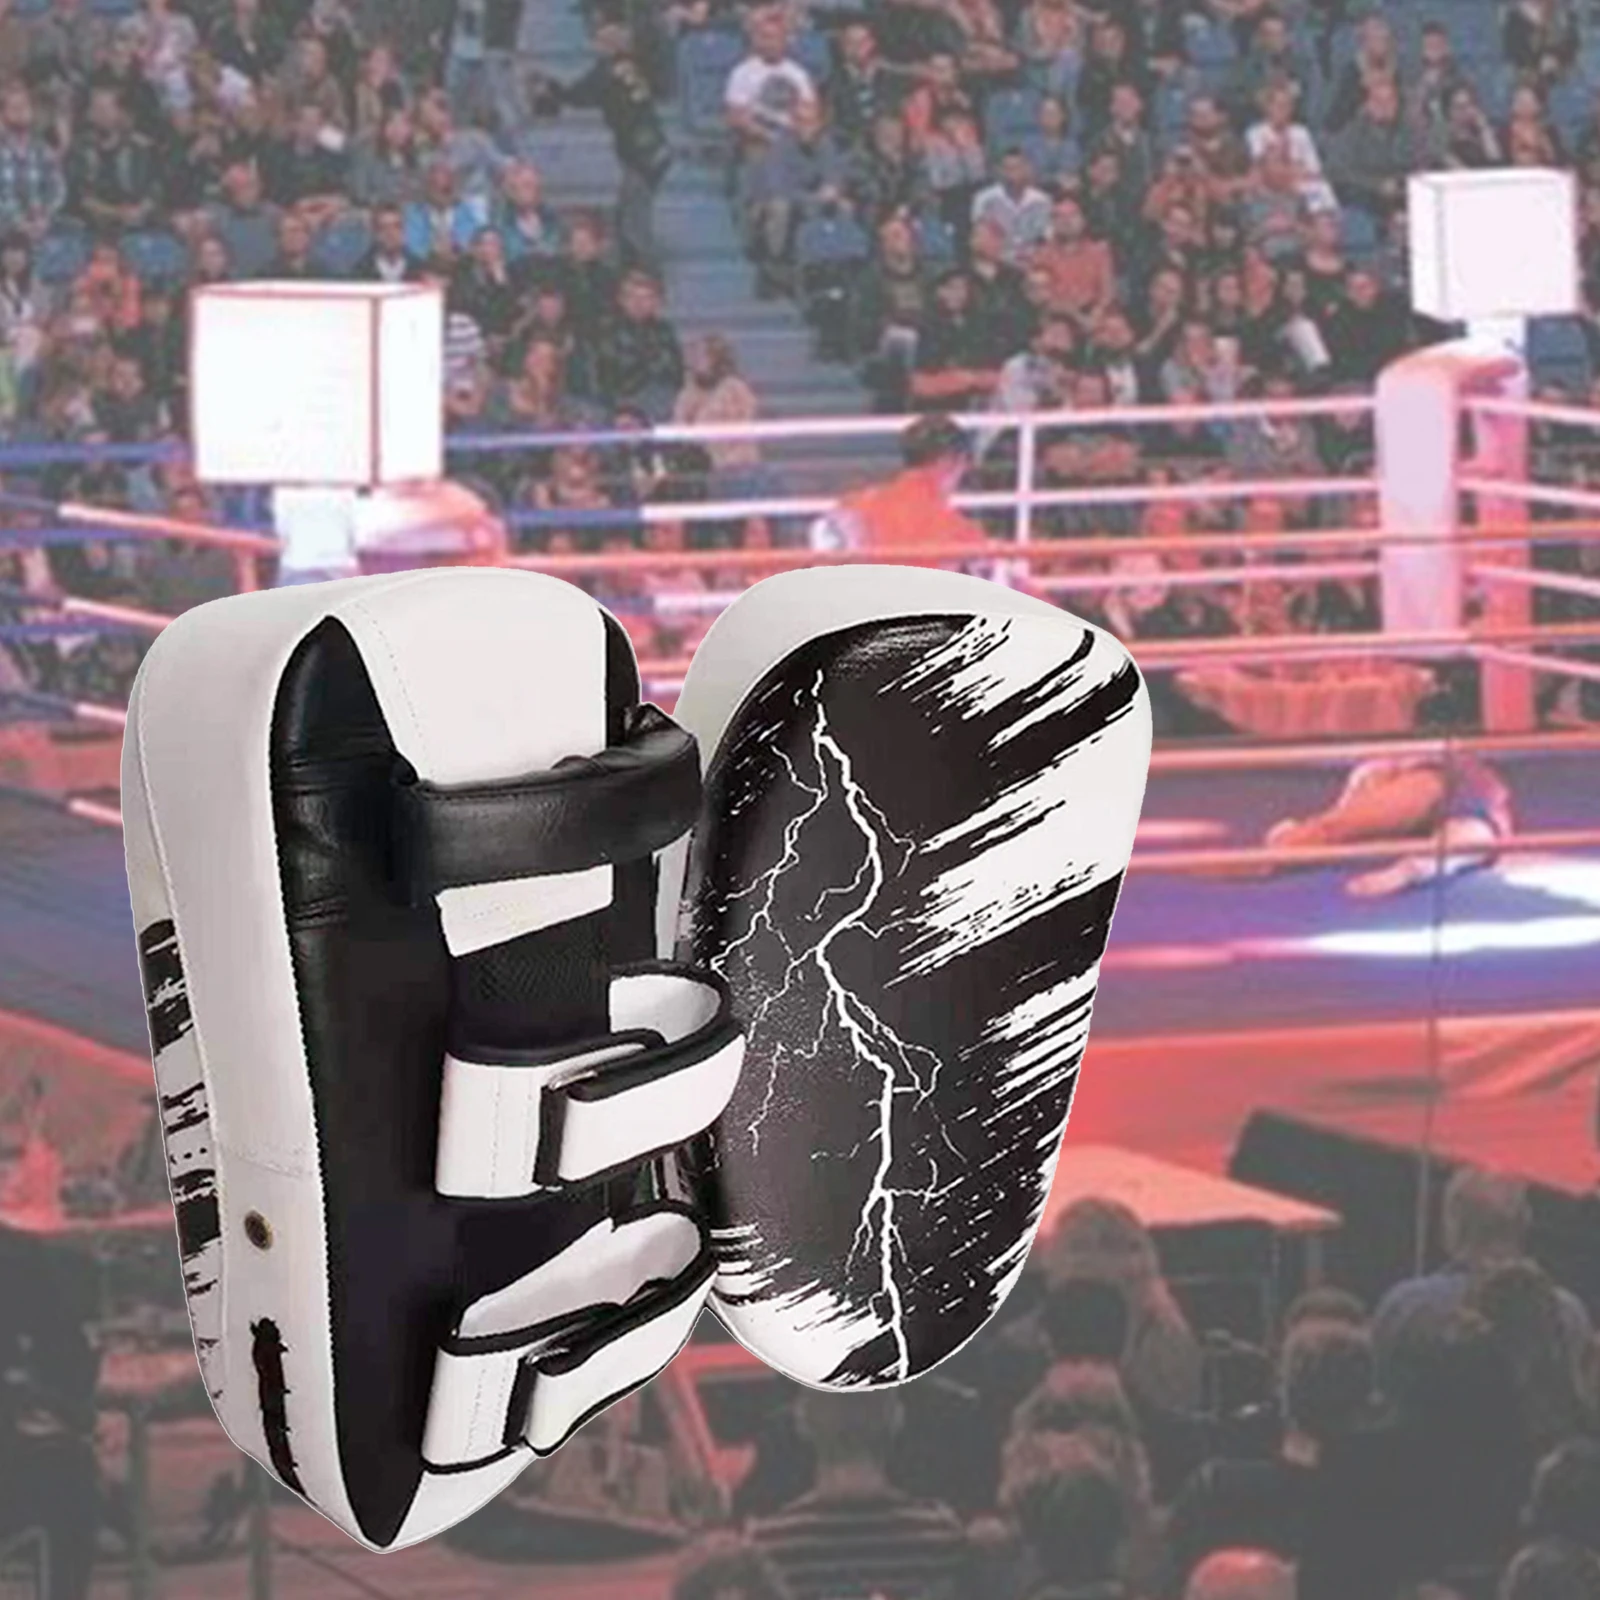 Kicking Strike Shield Boxing/Low Kick Target Pad  Gloves for MMA Karate Sanda Free Fight Sports Entertainment Gym Training